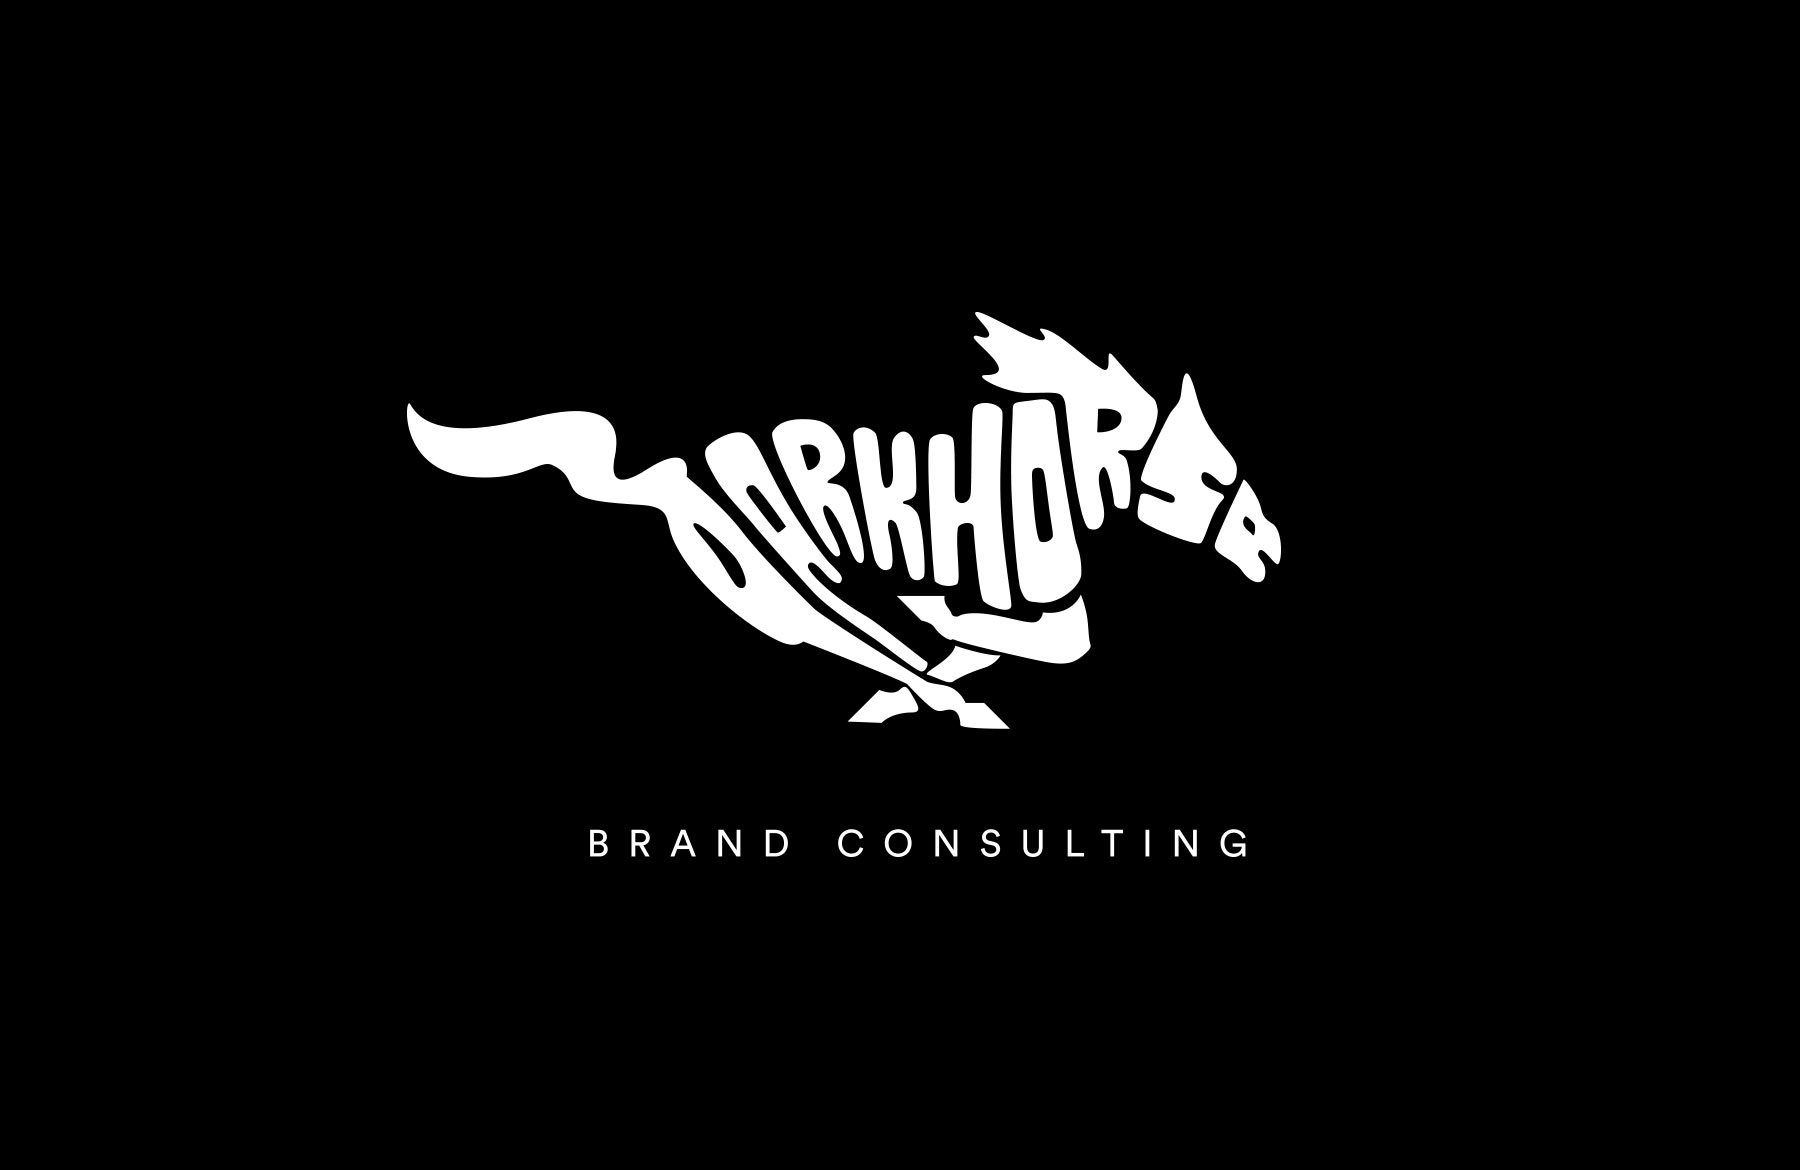 Dark Horse Brand Consulting | Digital Marketing & Branding Agency